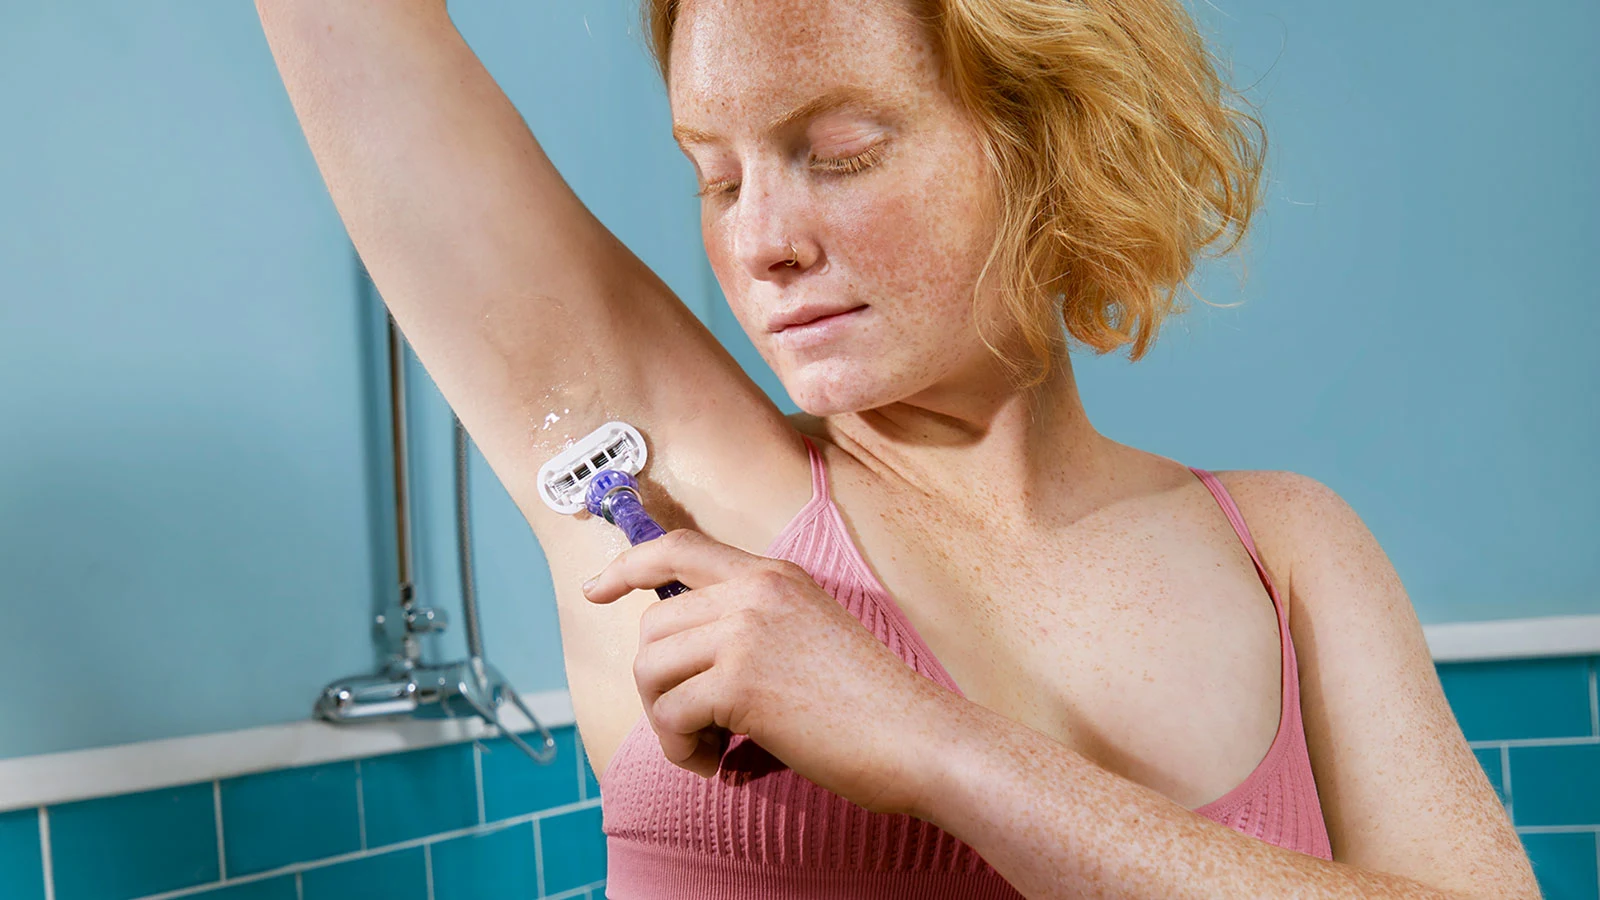 Woman shaving her armpit